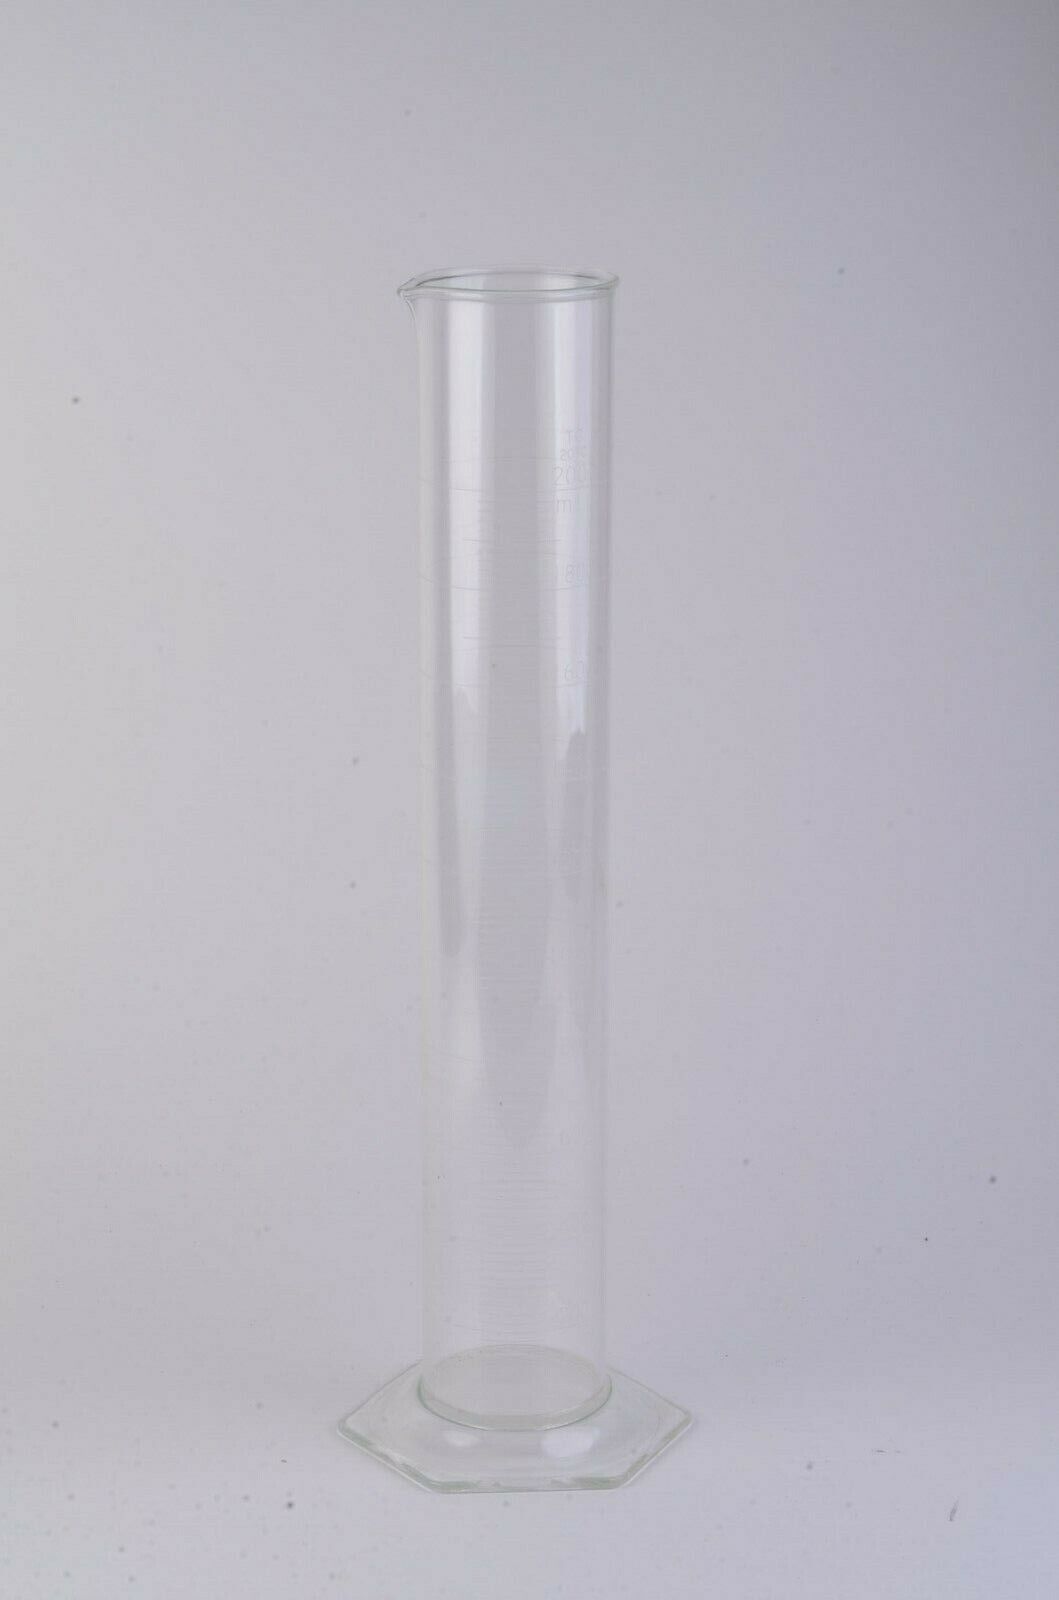 EXC++ PYREX LARGE 2000ml 20 DEGREES GLASS DARKROOM MEASURING BEAKER, CLEAN